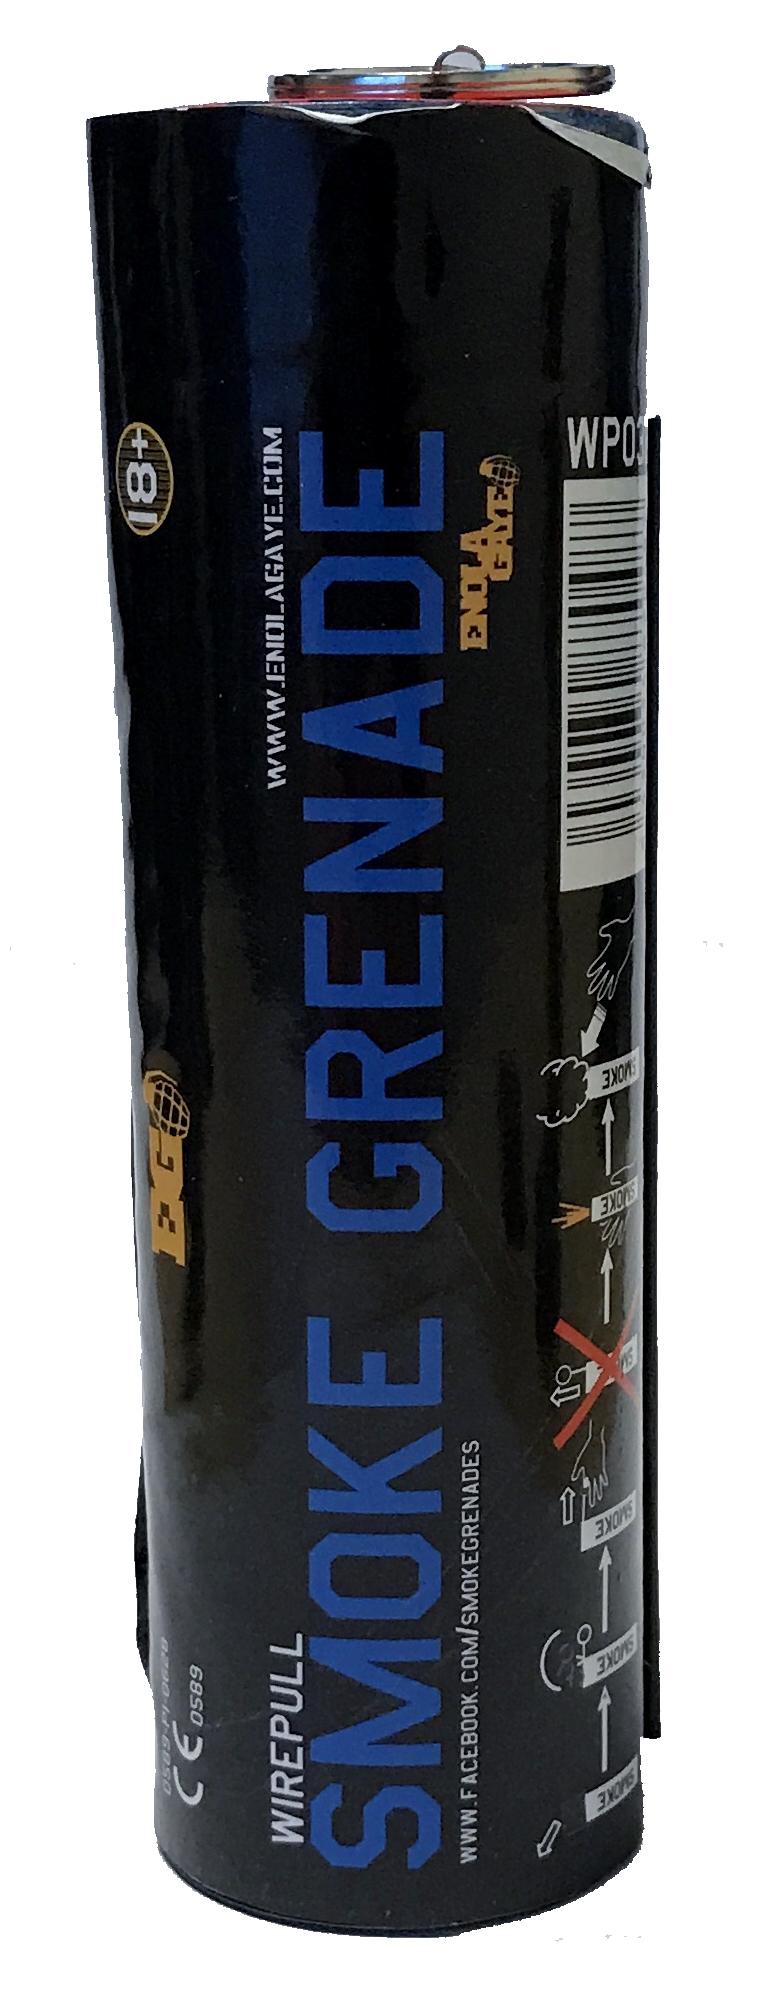 Smoke grenade blauw (PS0520)